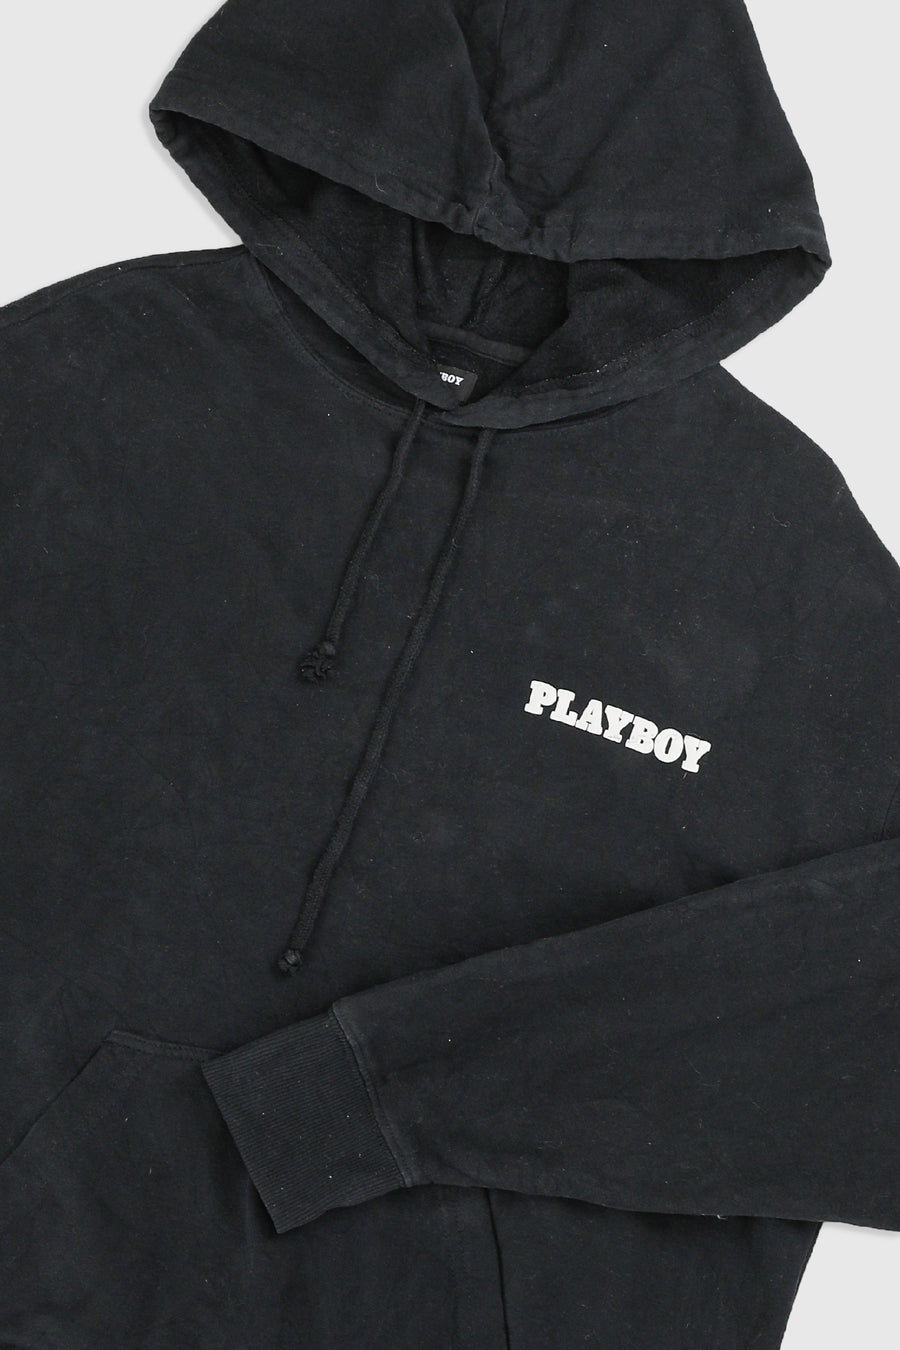 Vintage Playboy Hooded Sweatshirt - XS, S